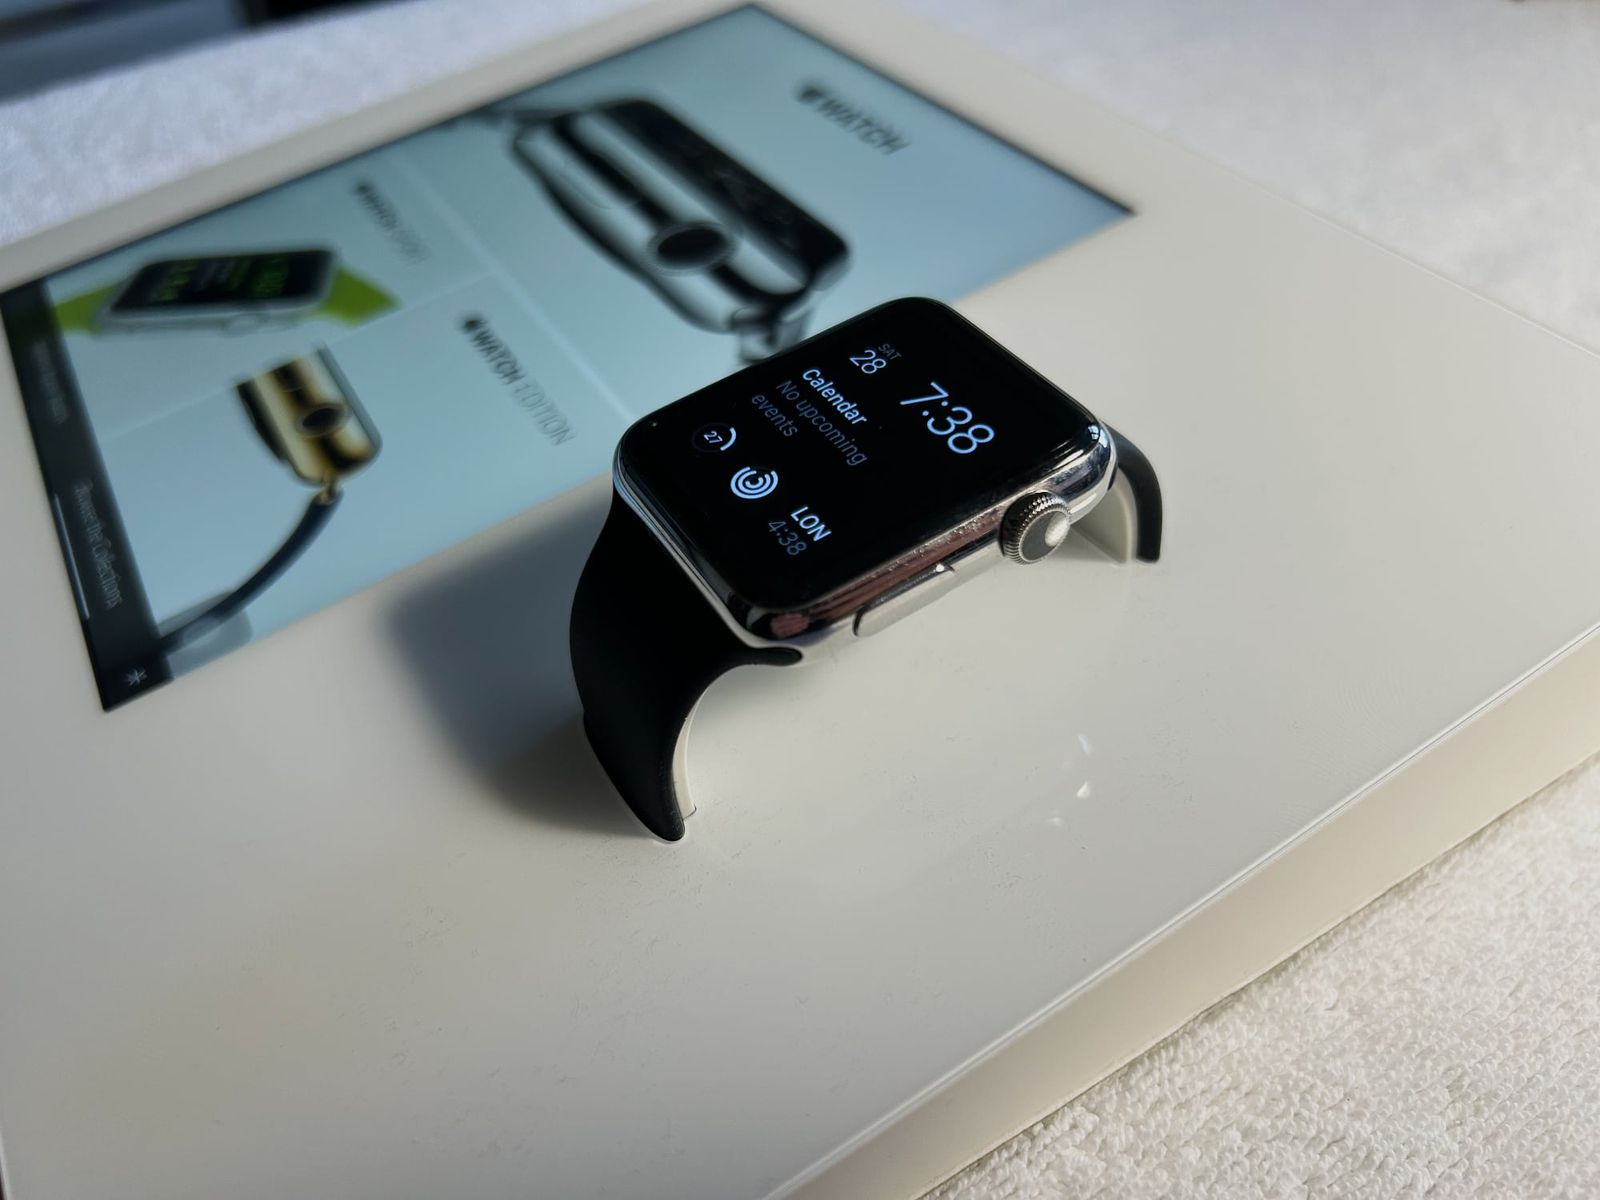 apple-watch-ipad-demo-5.jpg